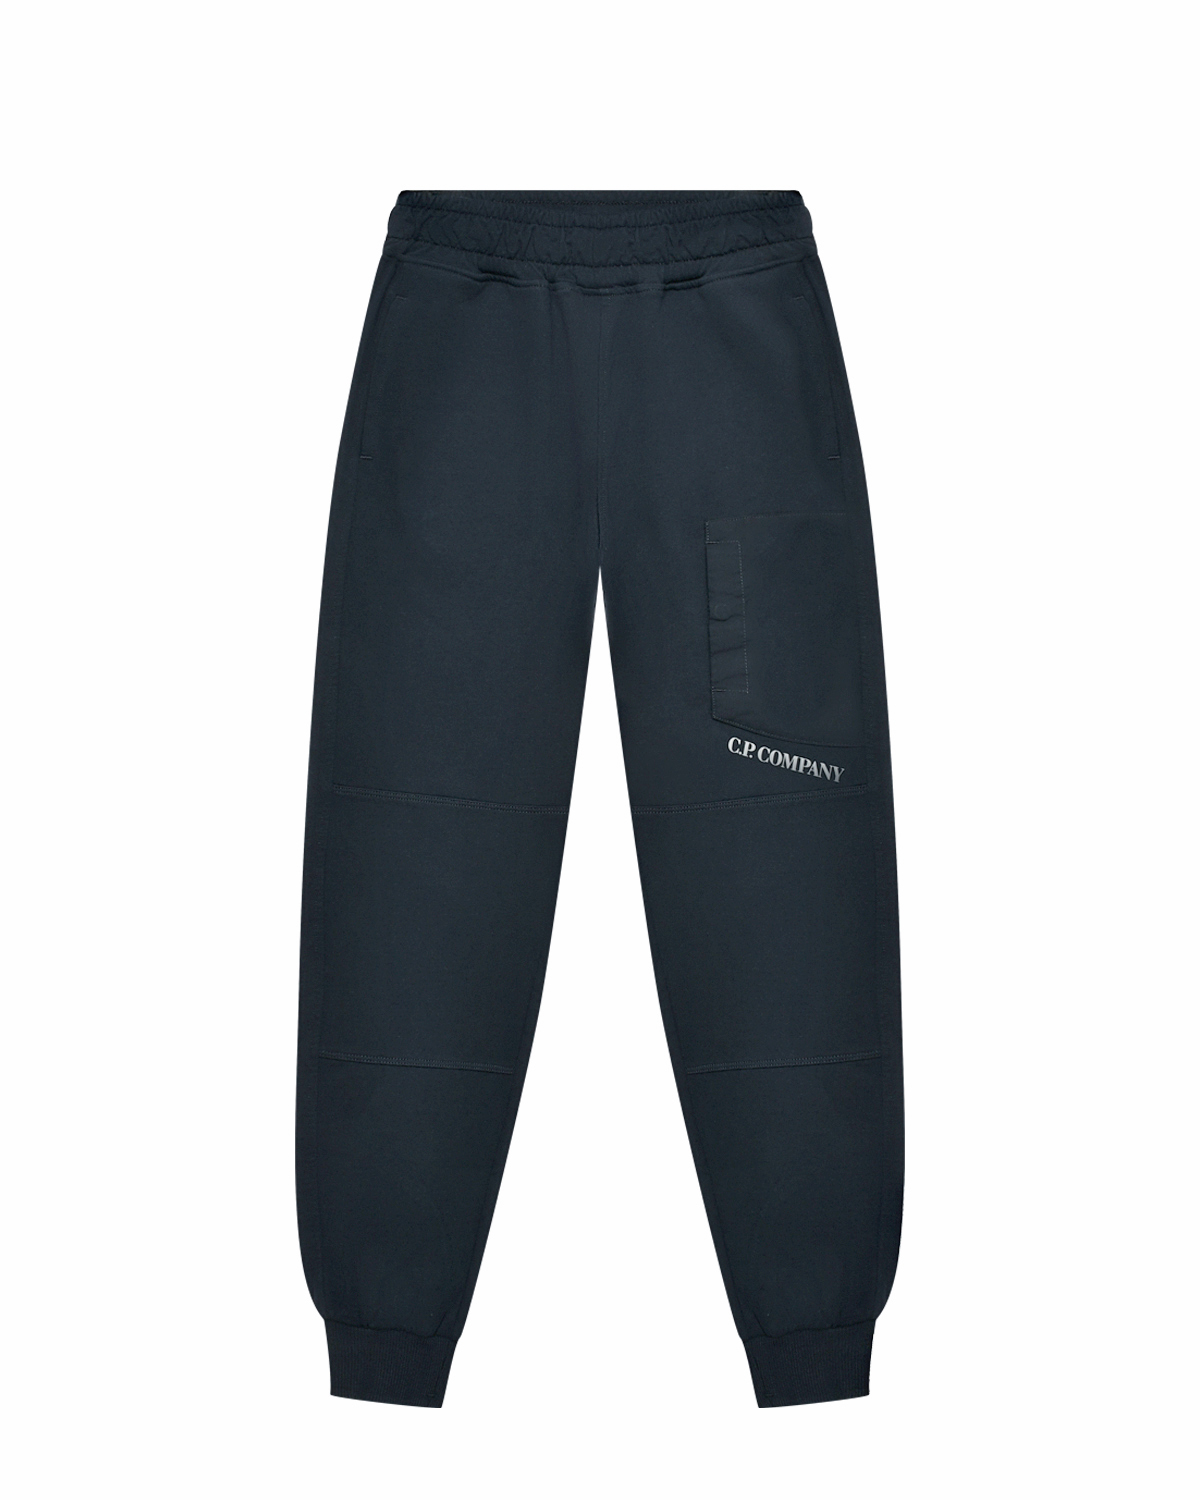 Спортивные брюки темно-синего цвета CP Company, размер 128